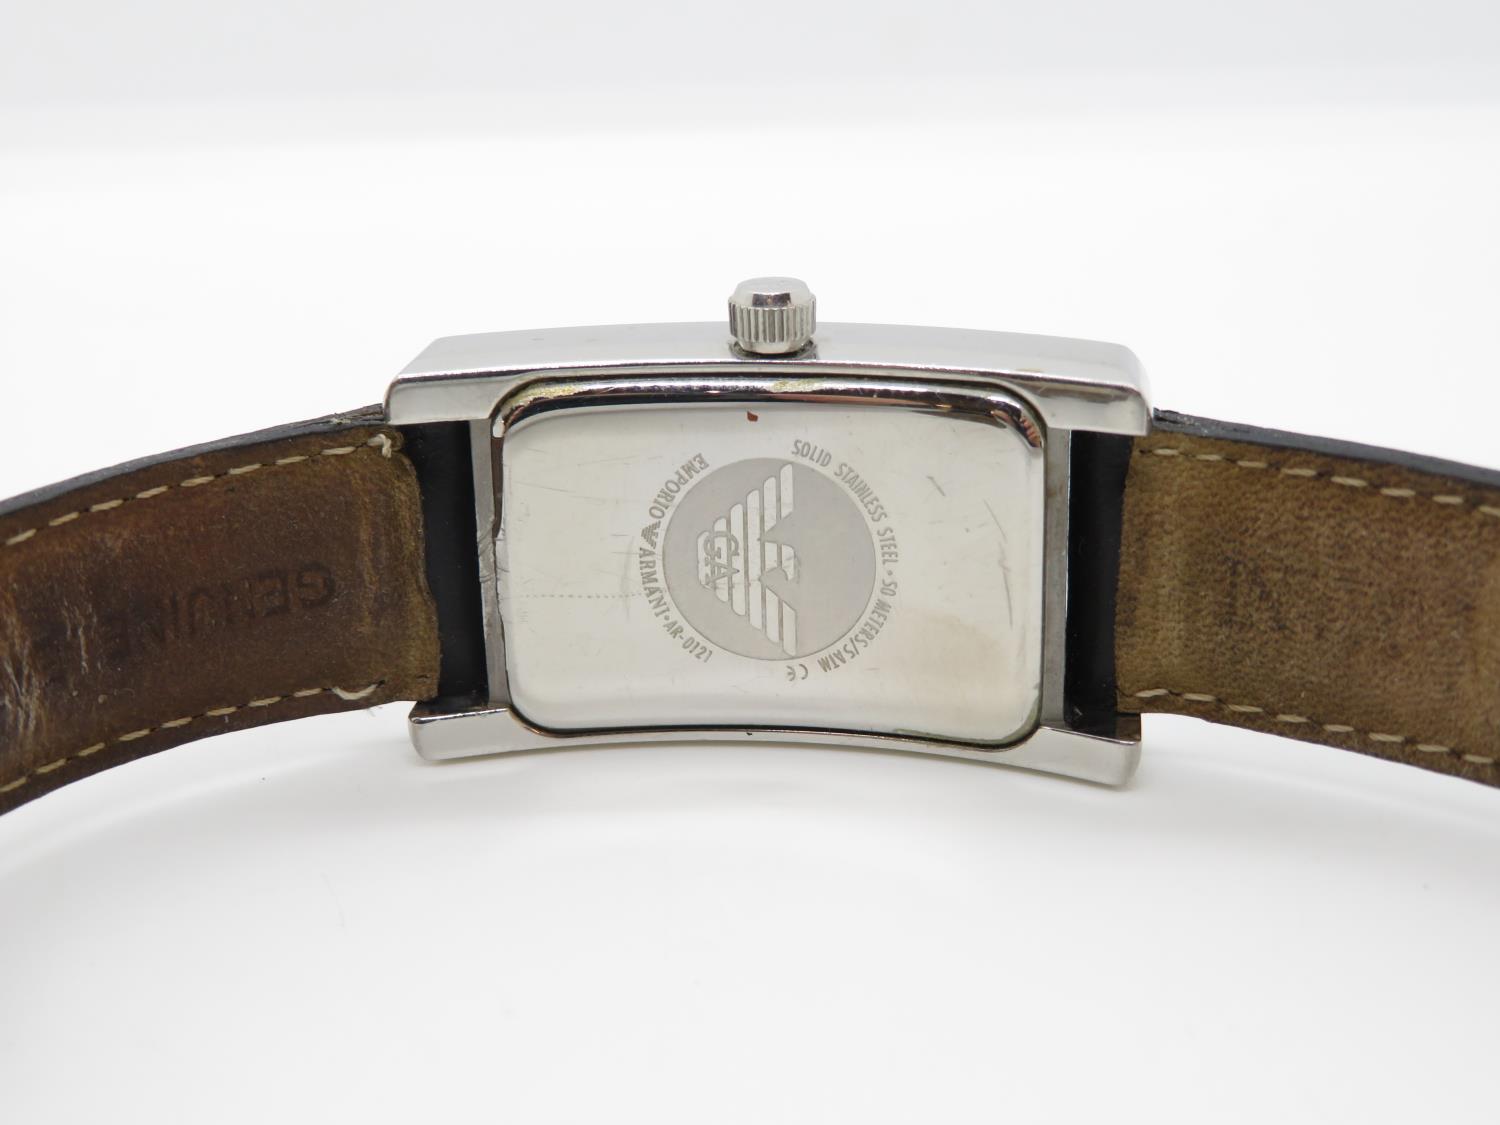 Emporio Armani wristwatch - Image 3 of 3